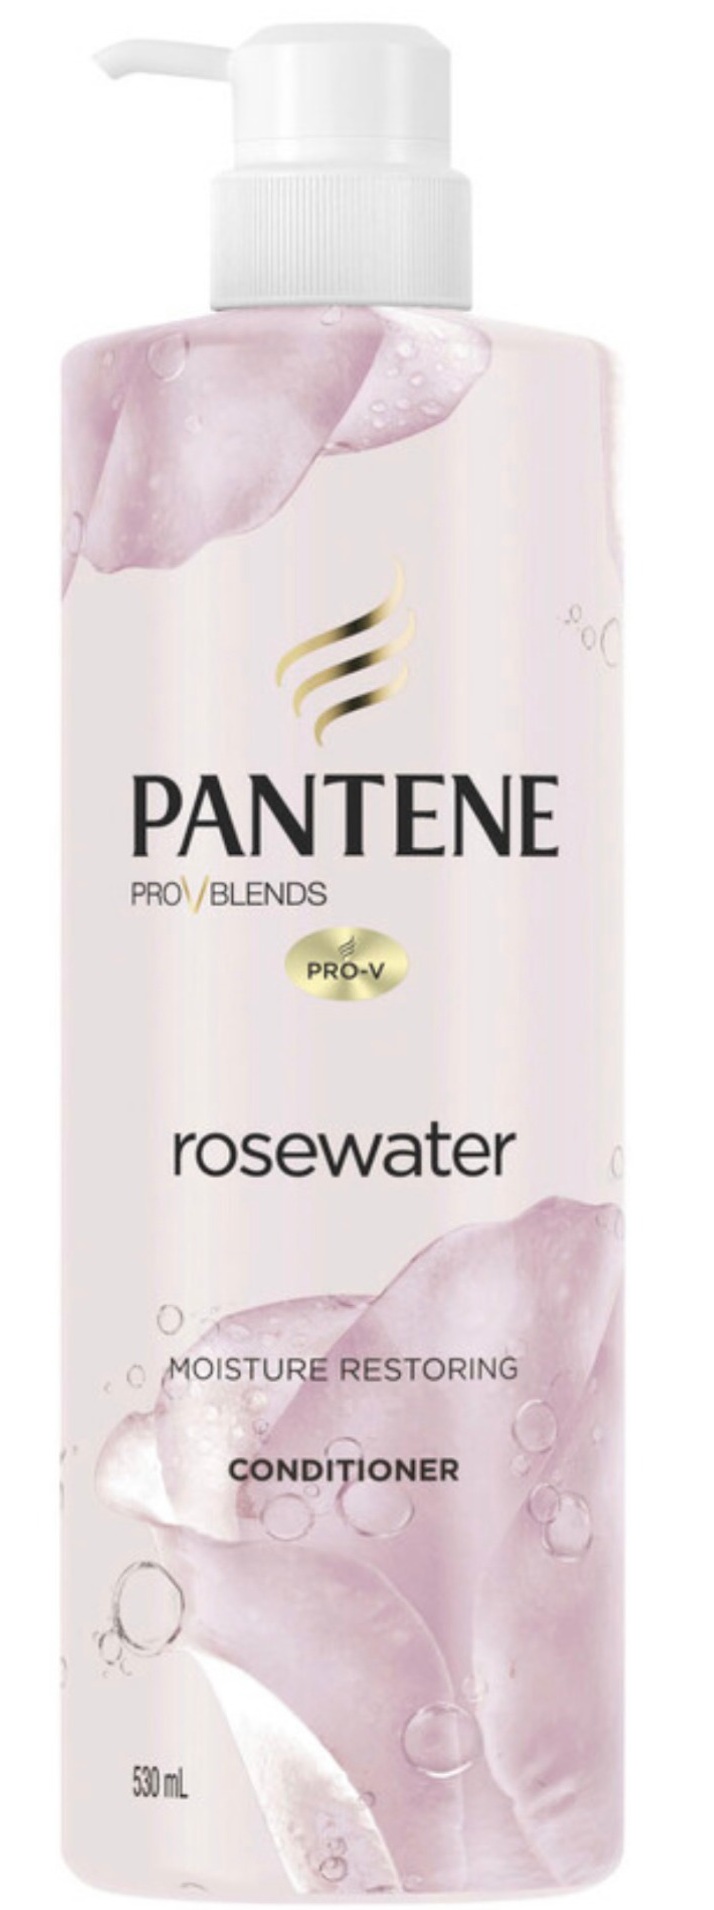 Pantene Pro V Blends Rosewater Moisture Restoring Conditioner